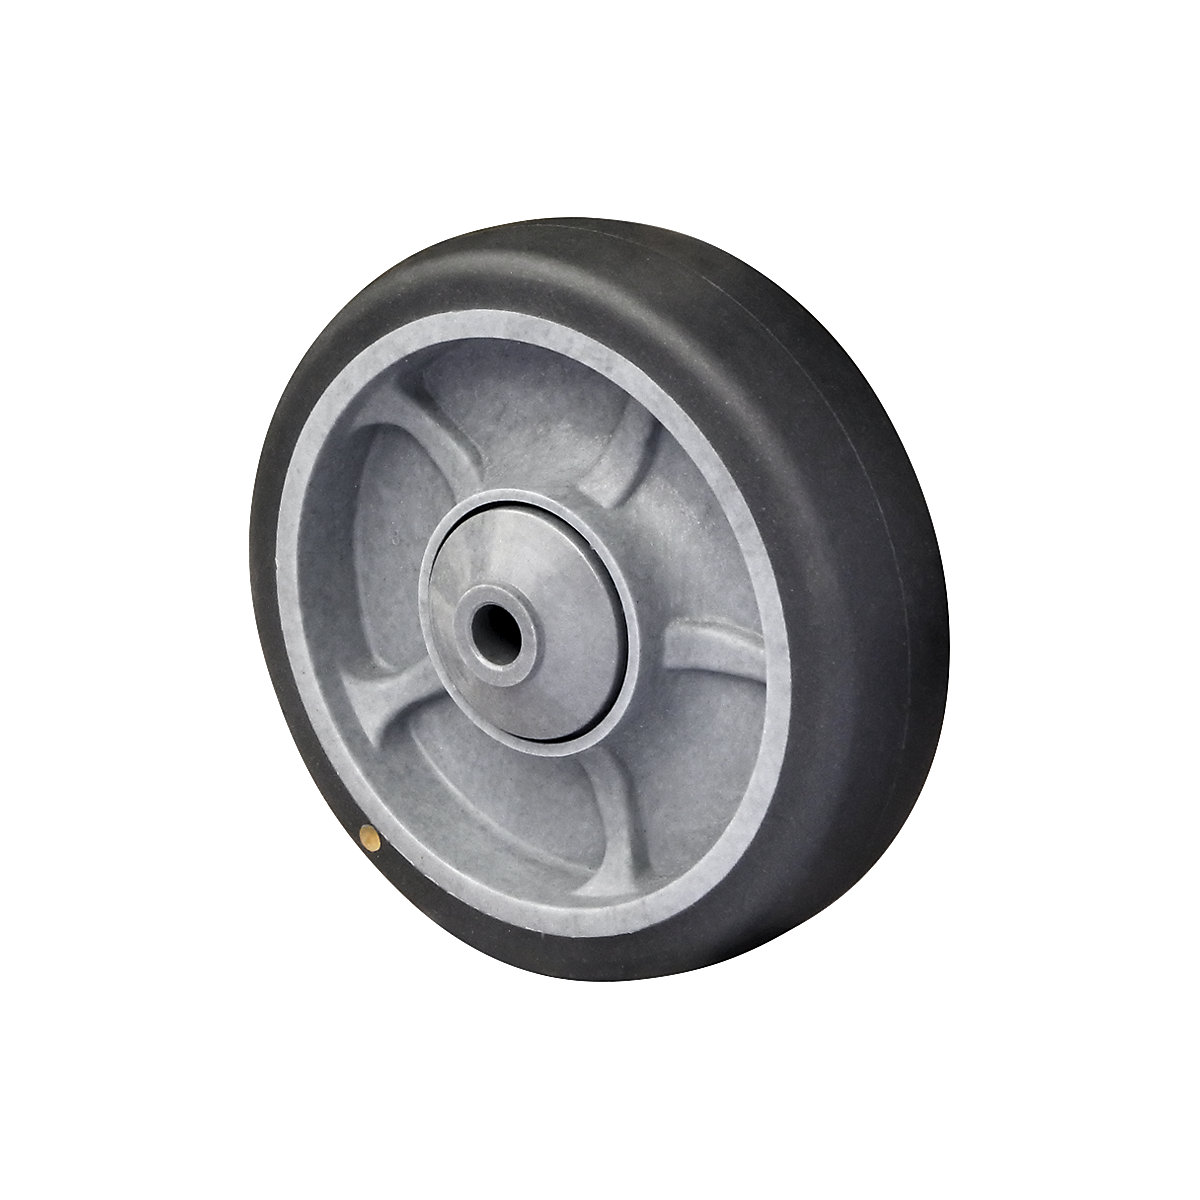 EUROKRAFTbasic – TPE wheel on PP rim, ESD, ball bearings, wheel Ø x width 160 x 40 mm